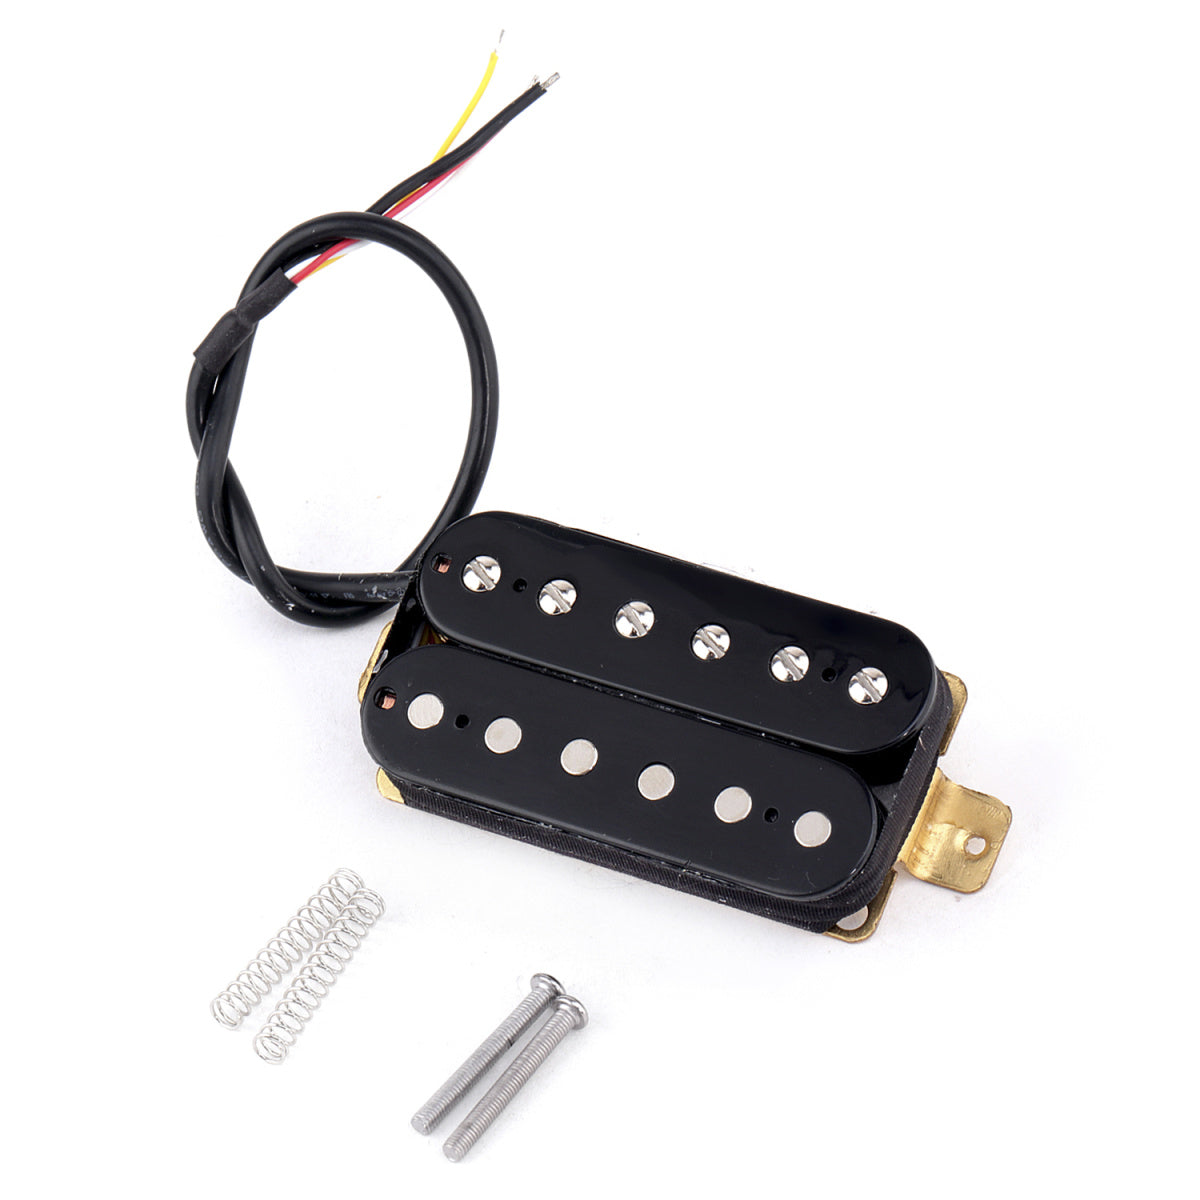 Musiclily Pro Alnico 5 Humbucker Pickup for Electric Guitar Bridge, Black